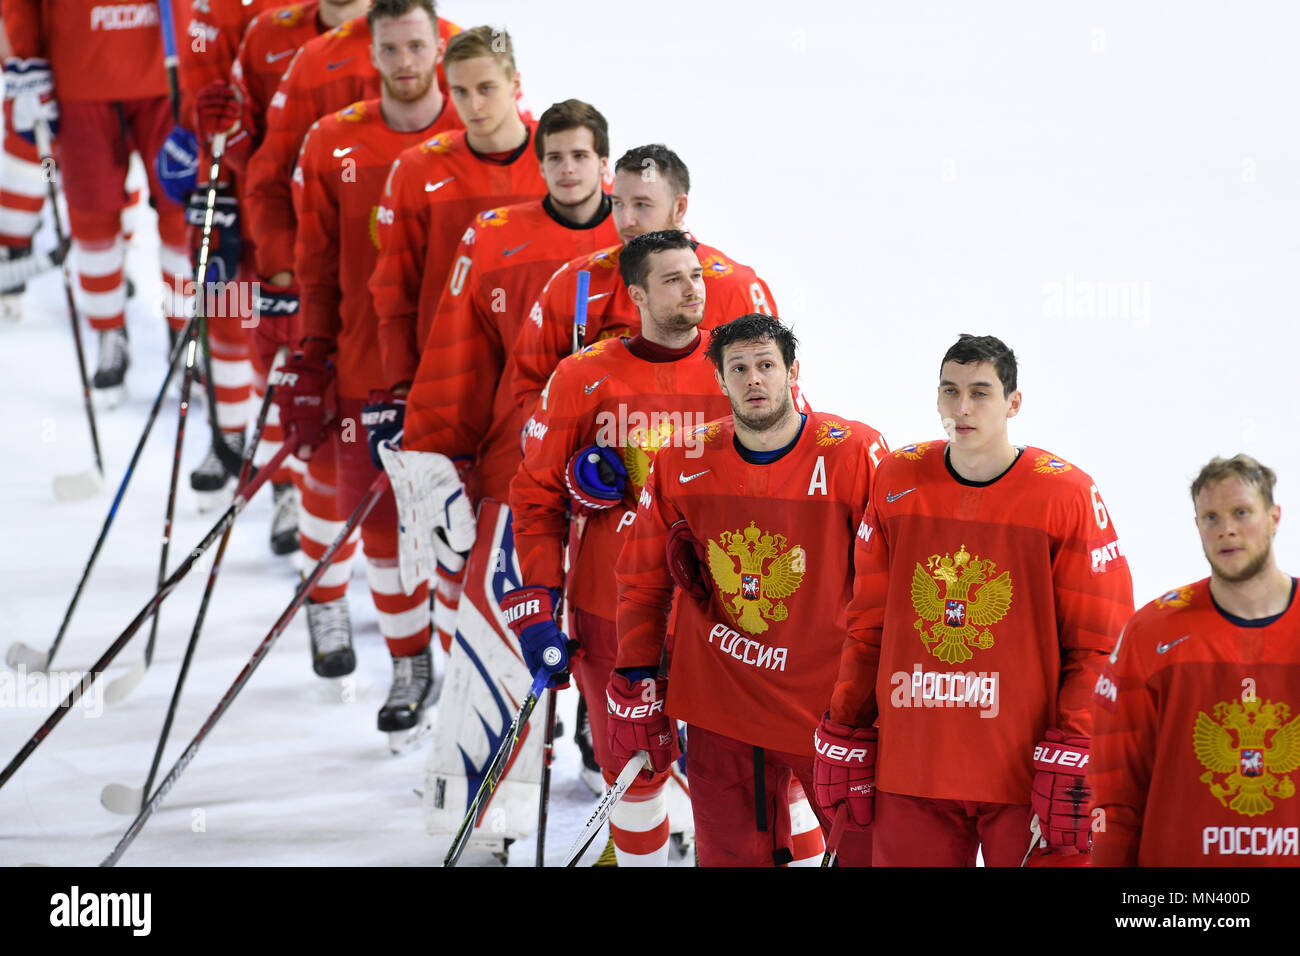 Russia men's national ice hockey team - Wikipedia